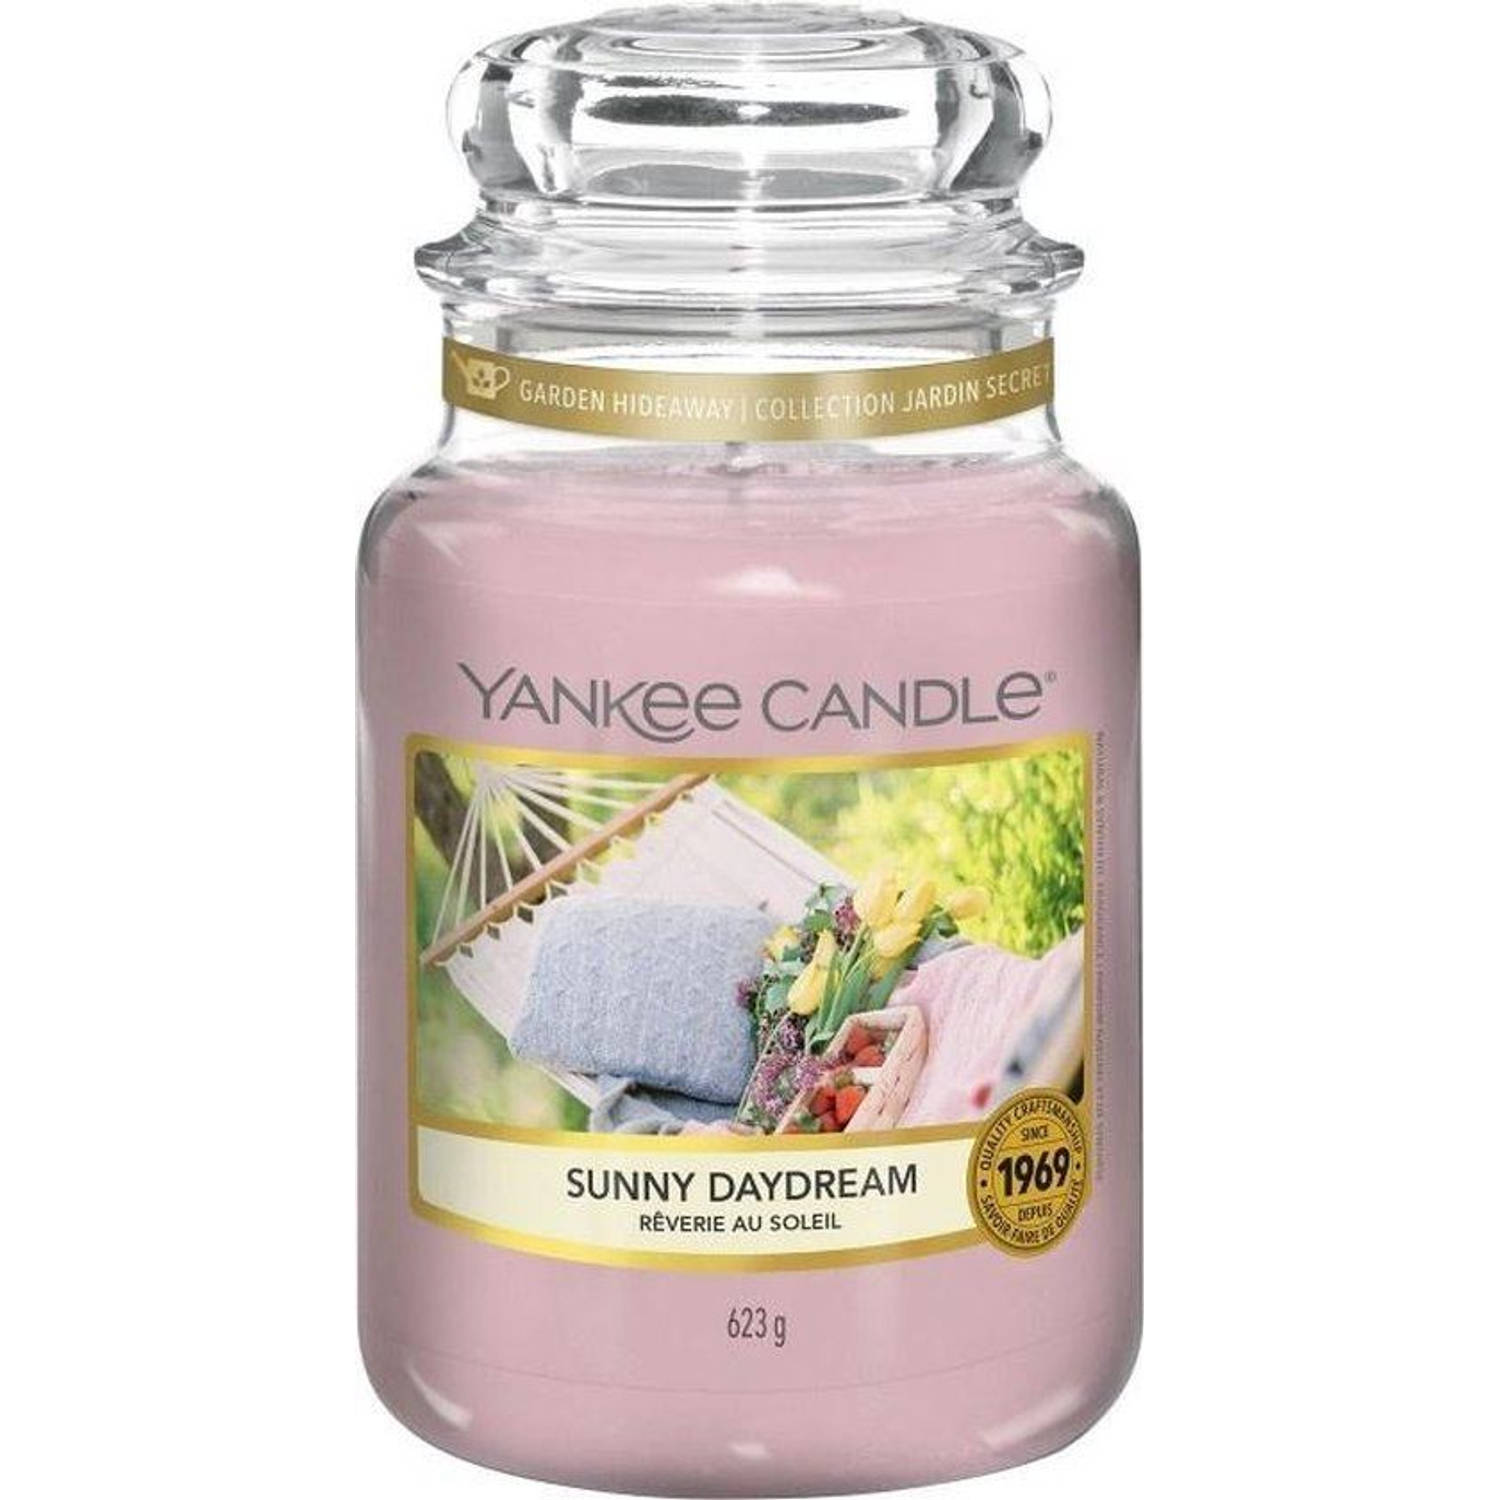 Yankee Candle - Sunny Daydream geurkaars - Large Jar - Tot 150 branduren